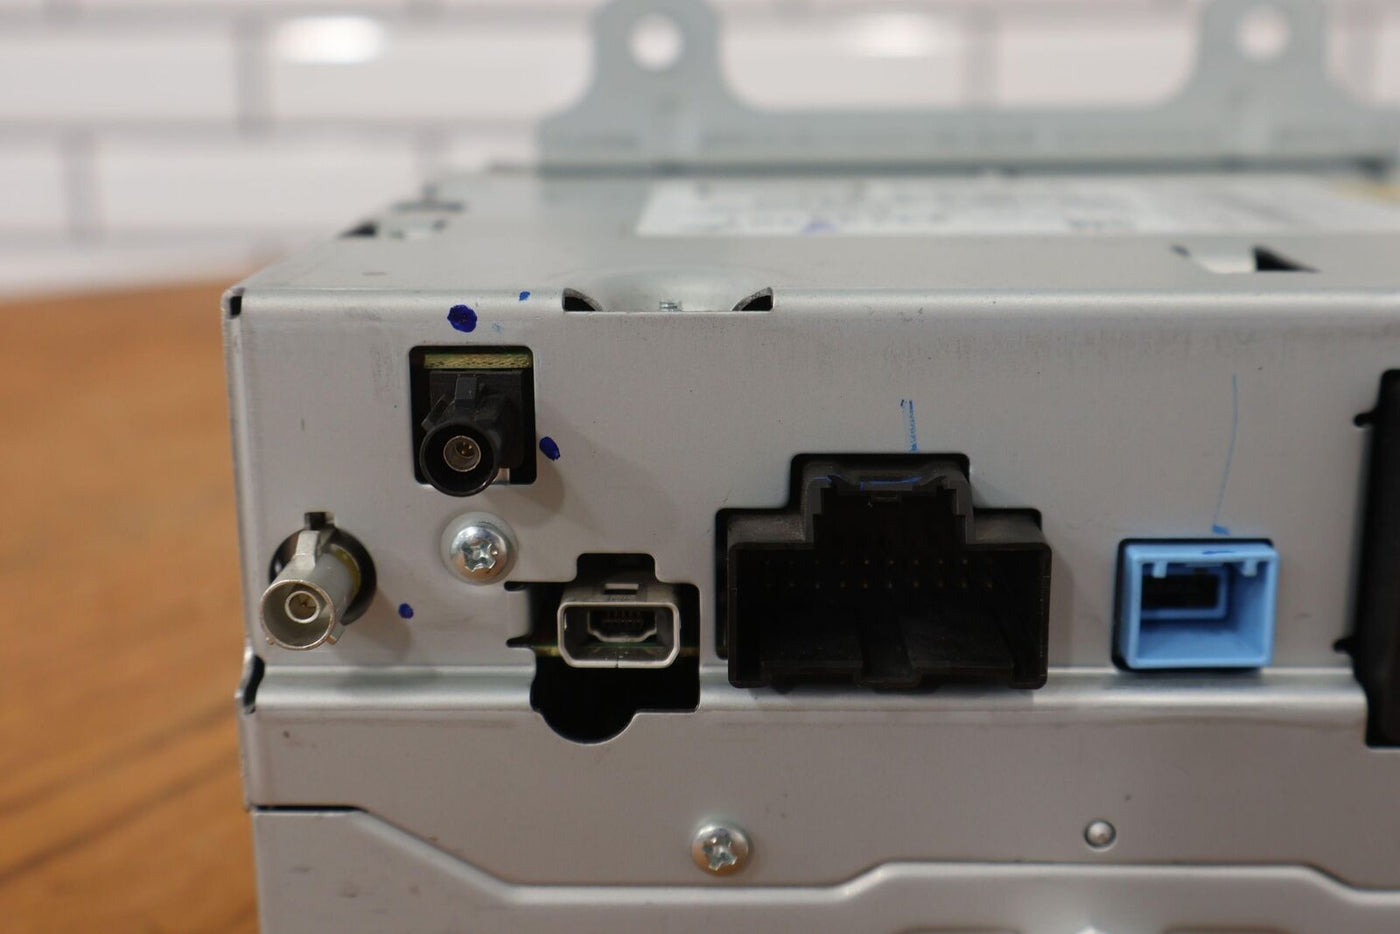 13-15 Chevy Camaro SS Radio Receiver Opt UFU (23135481) Tested